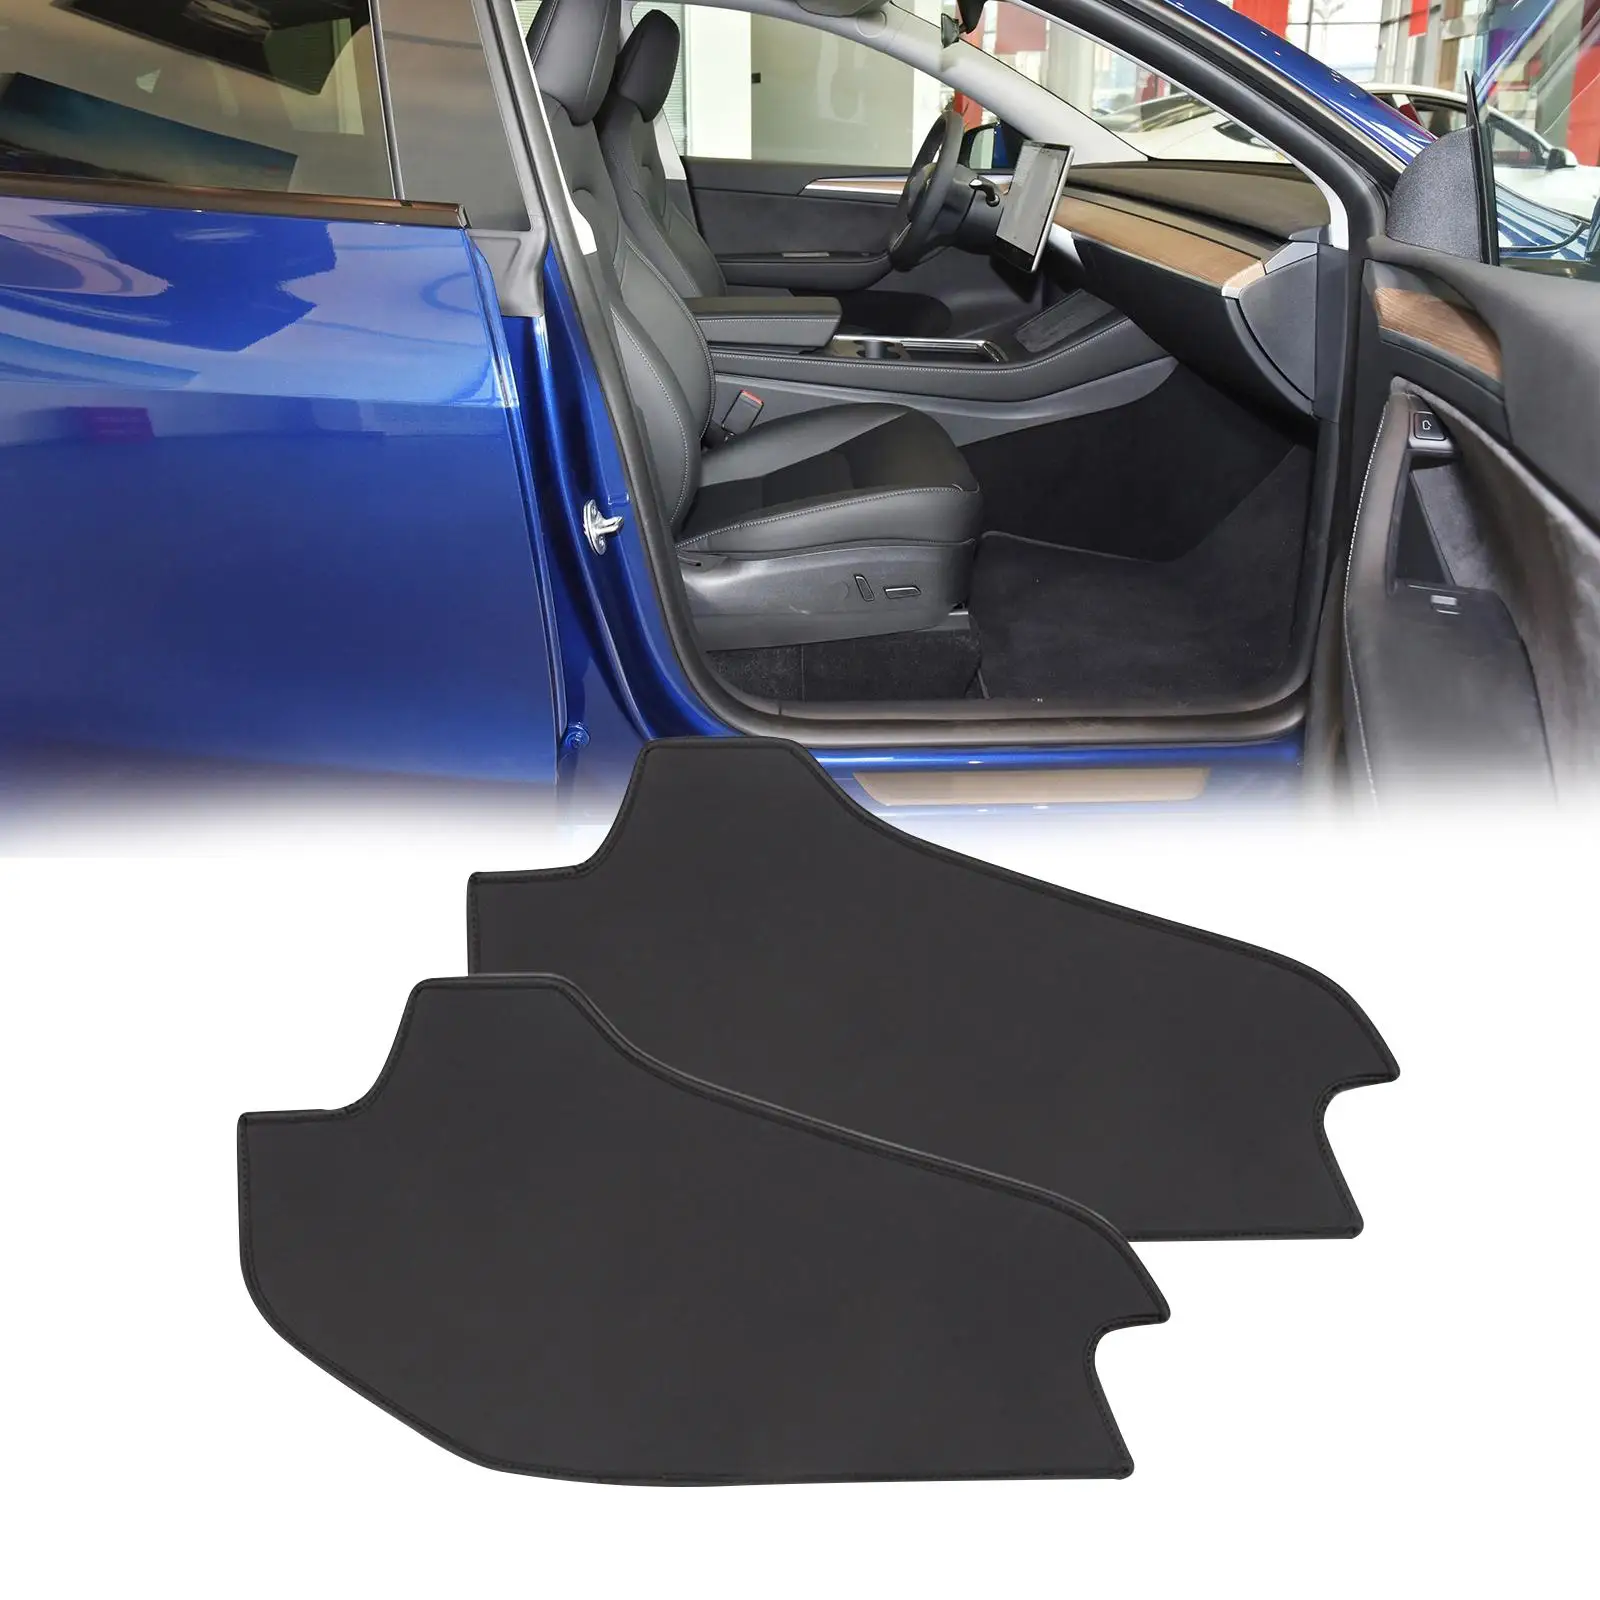 2Pcs Center Console Anti  Anti Dust  Replaces Car Interior Accessories Durable Console Protector Cover